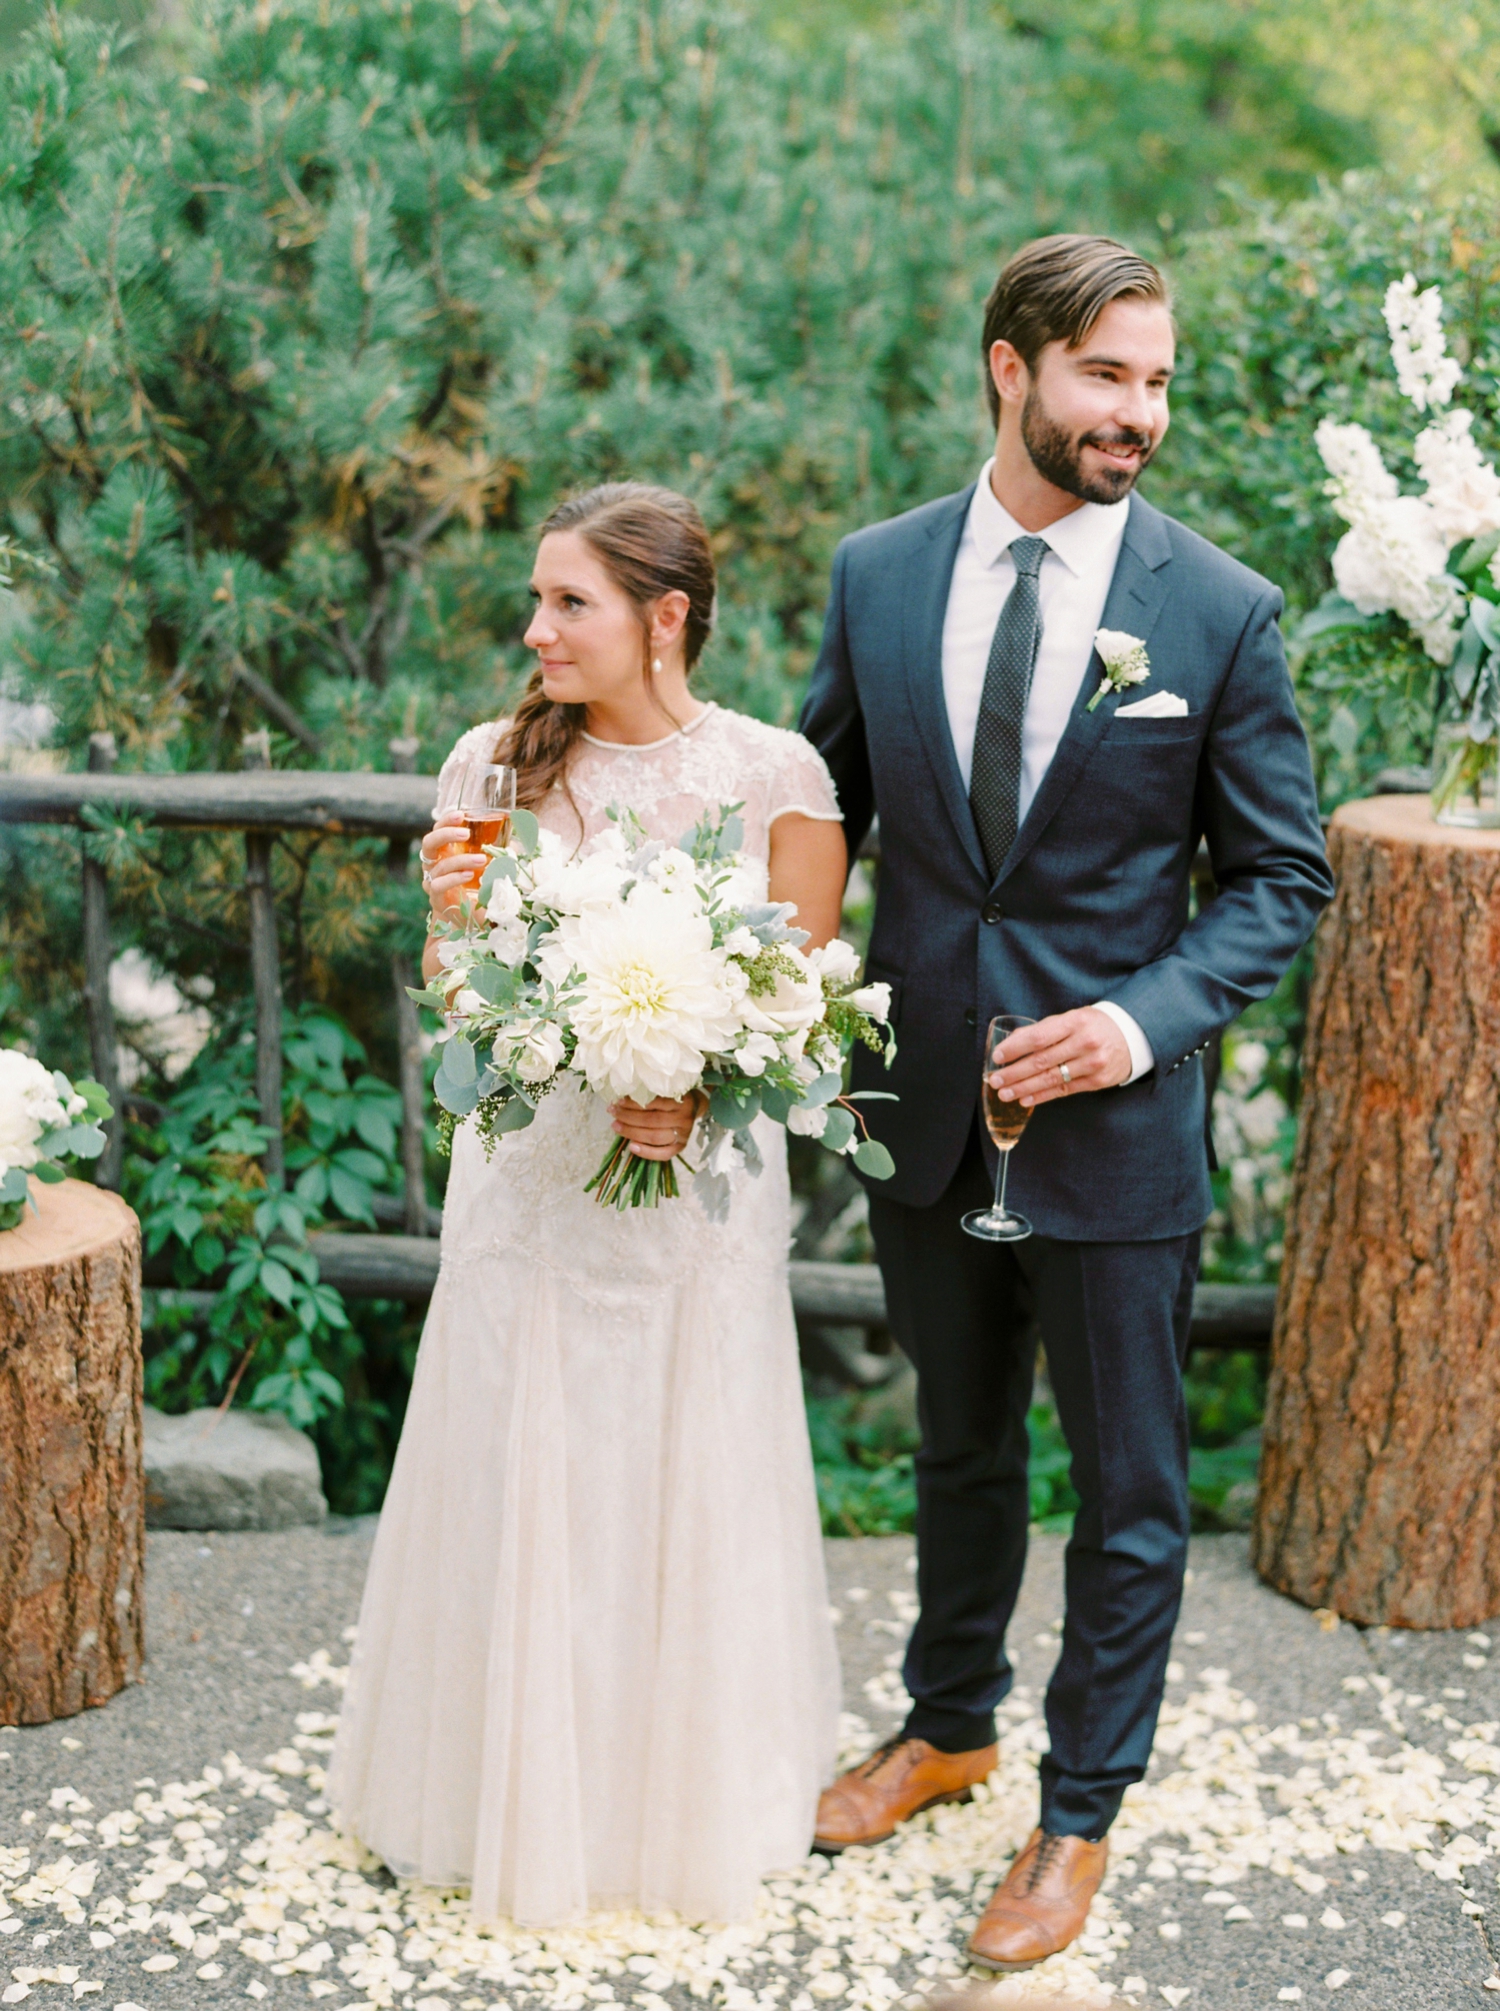 Calgary wedding photographers | fine art film | Justine Milton Photography | wedding inspiration | wedding chairs | wedding flowers | wedding ceremony | bride and groom | wedding vows